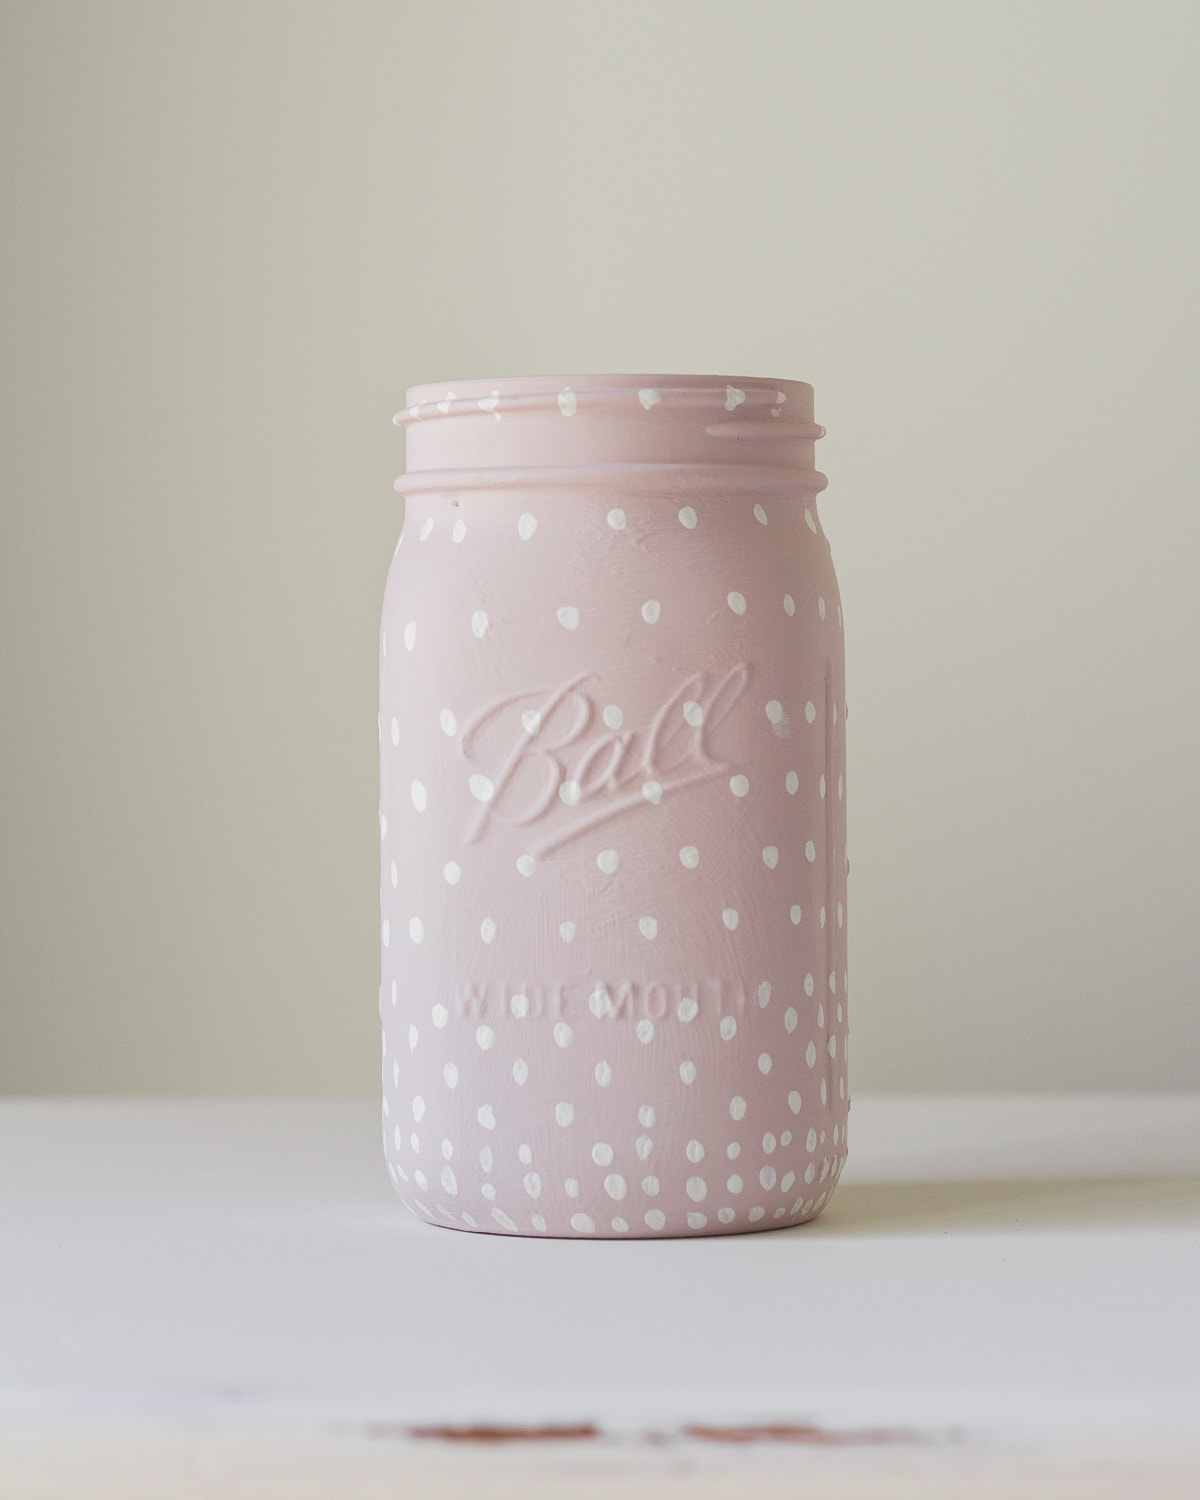 A ball mason jar painted pink with white polka dots.